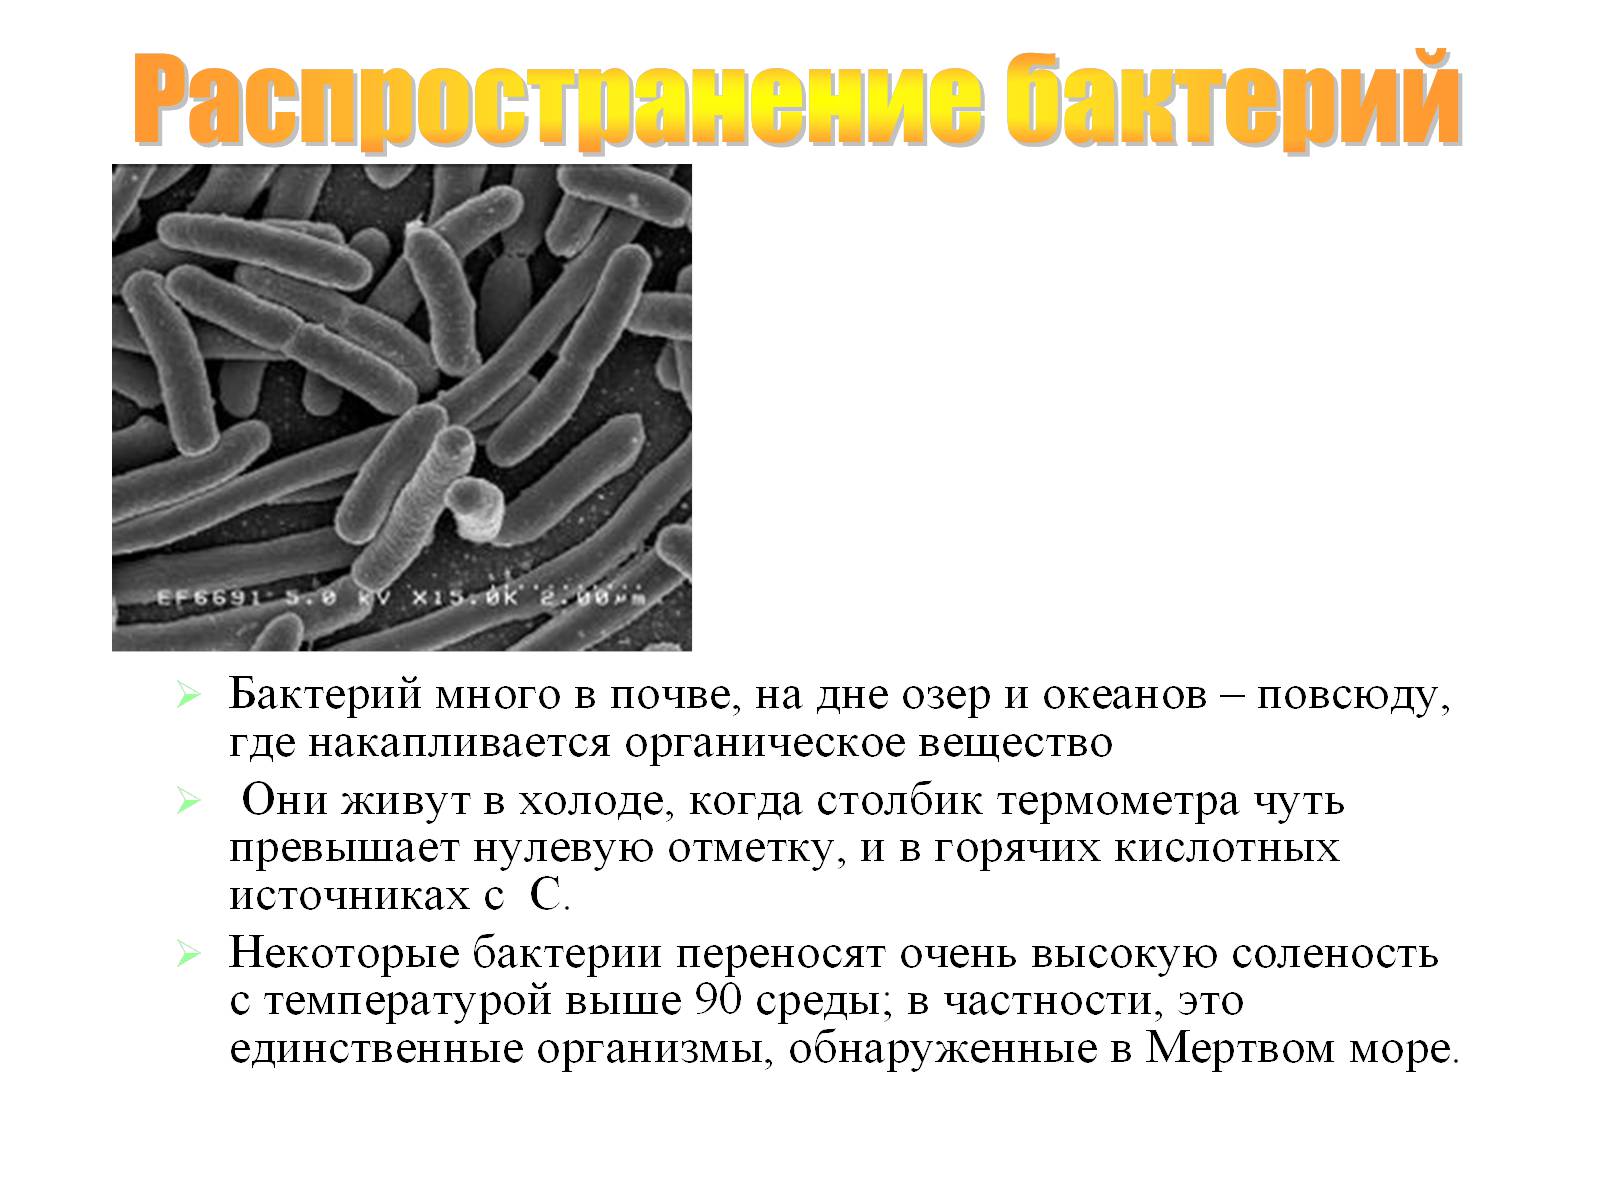 Сообщение по биологии бактерии. Бактерии презентация. Бактерии 5 класс. Сообщение по биологии про бактерии. Доклад о бактериях.